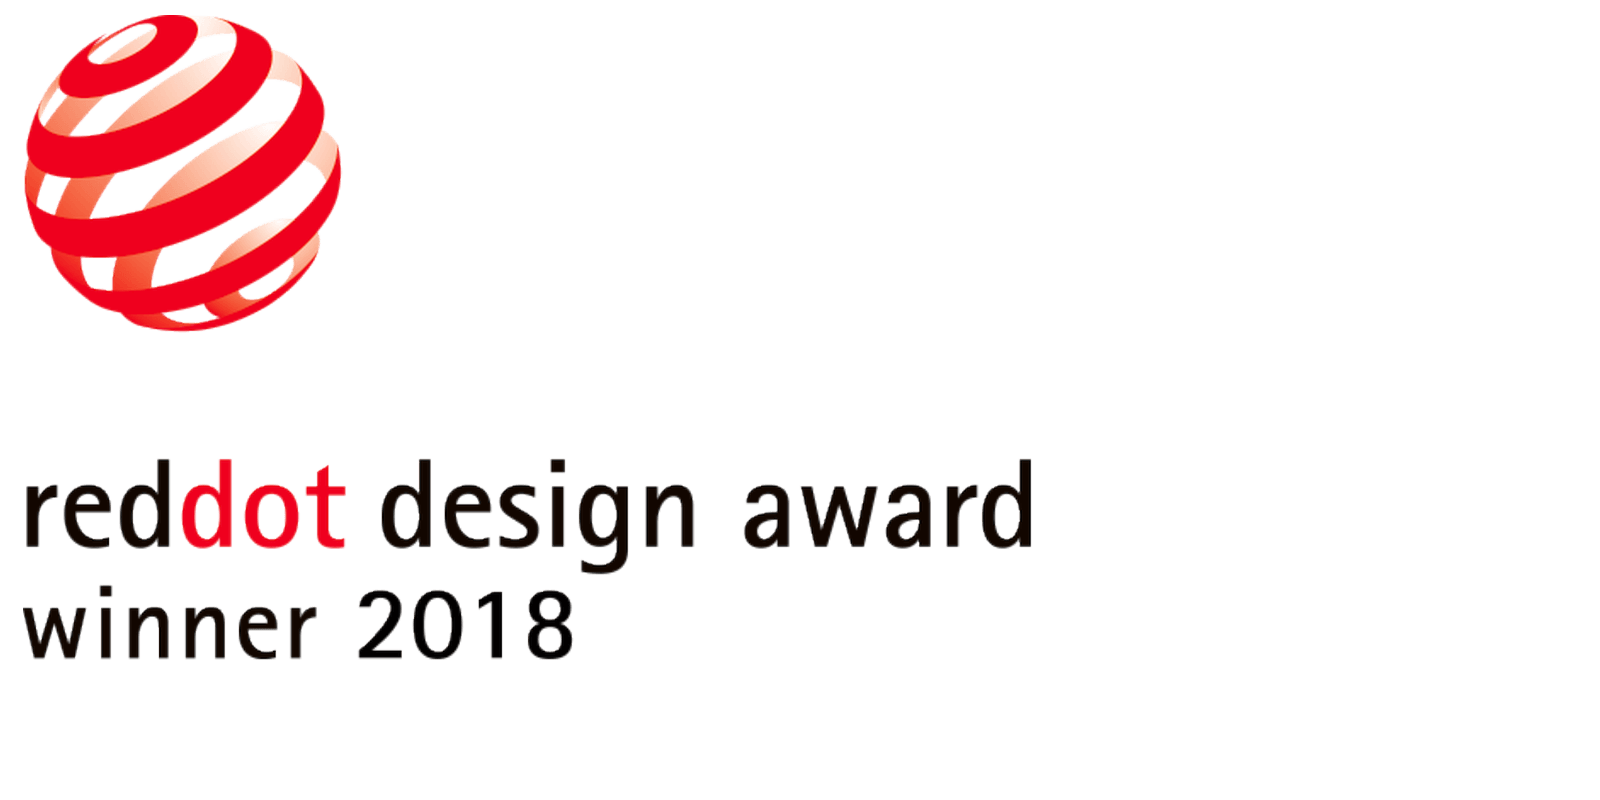 Red Dot design award logo